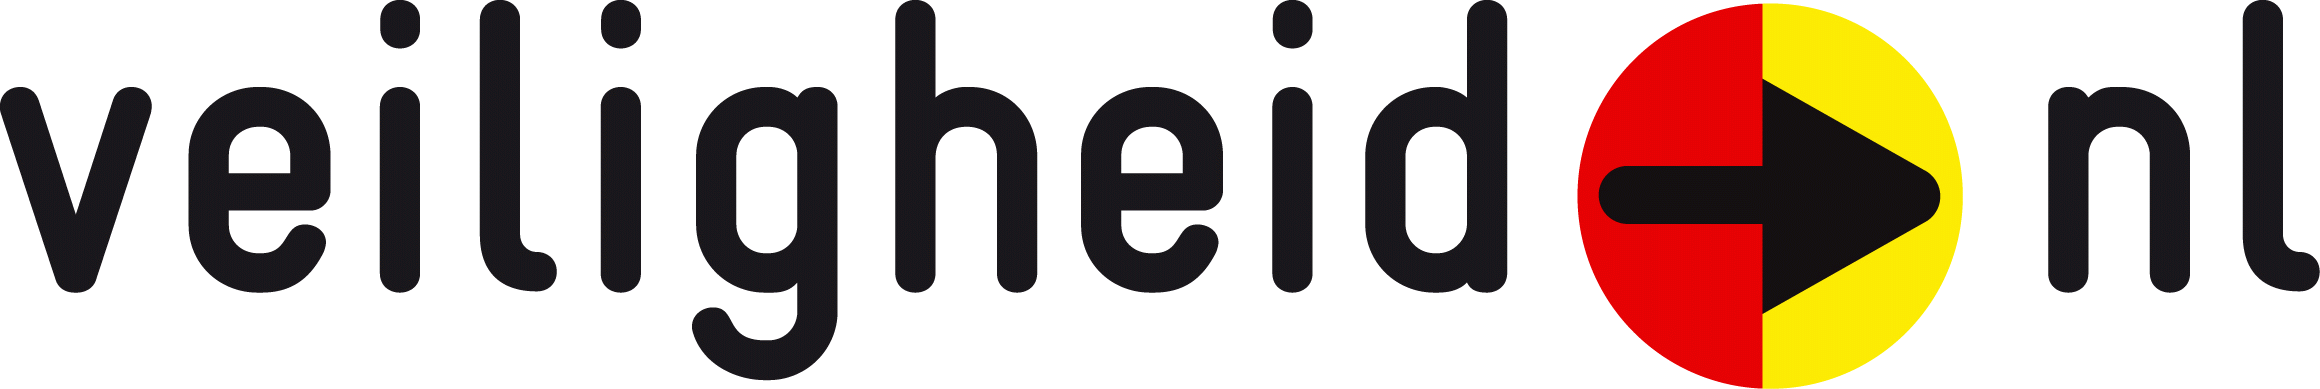 VeiligheidNL-logo-RGB